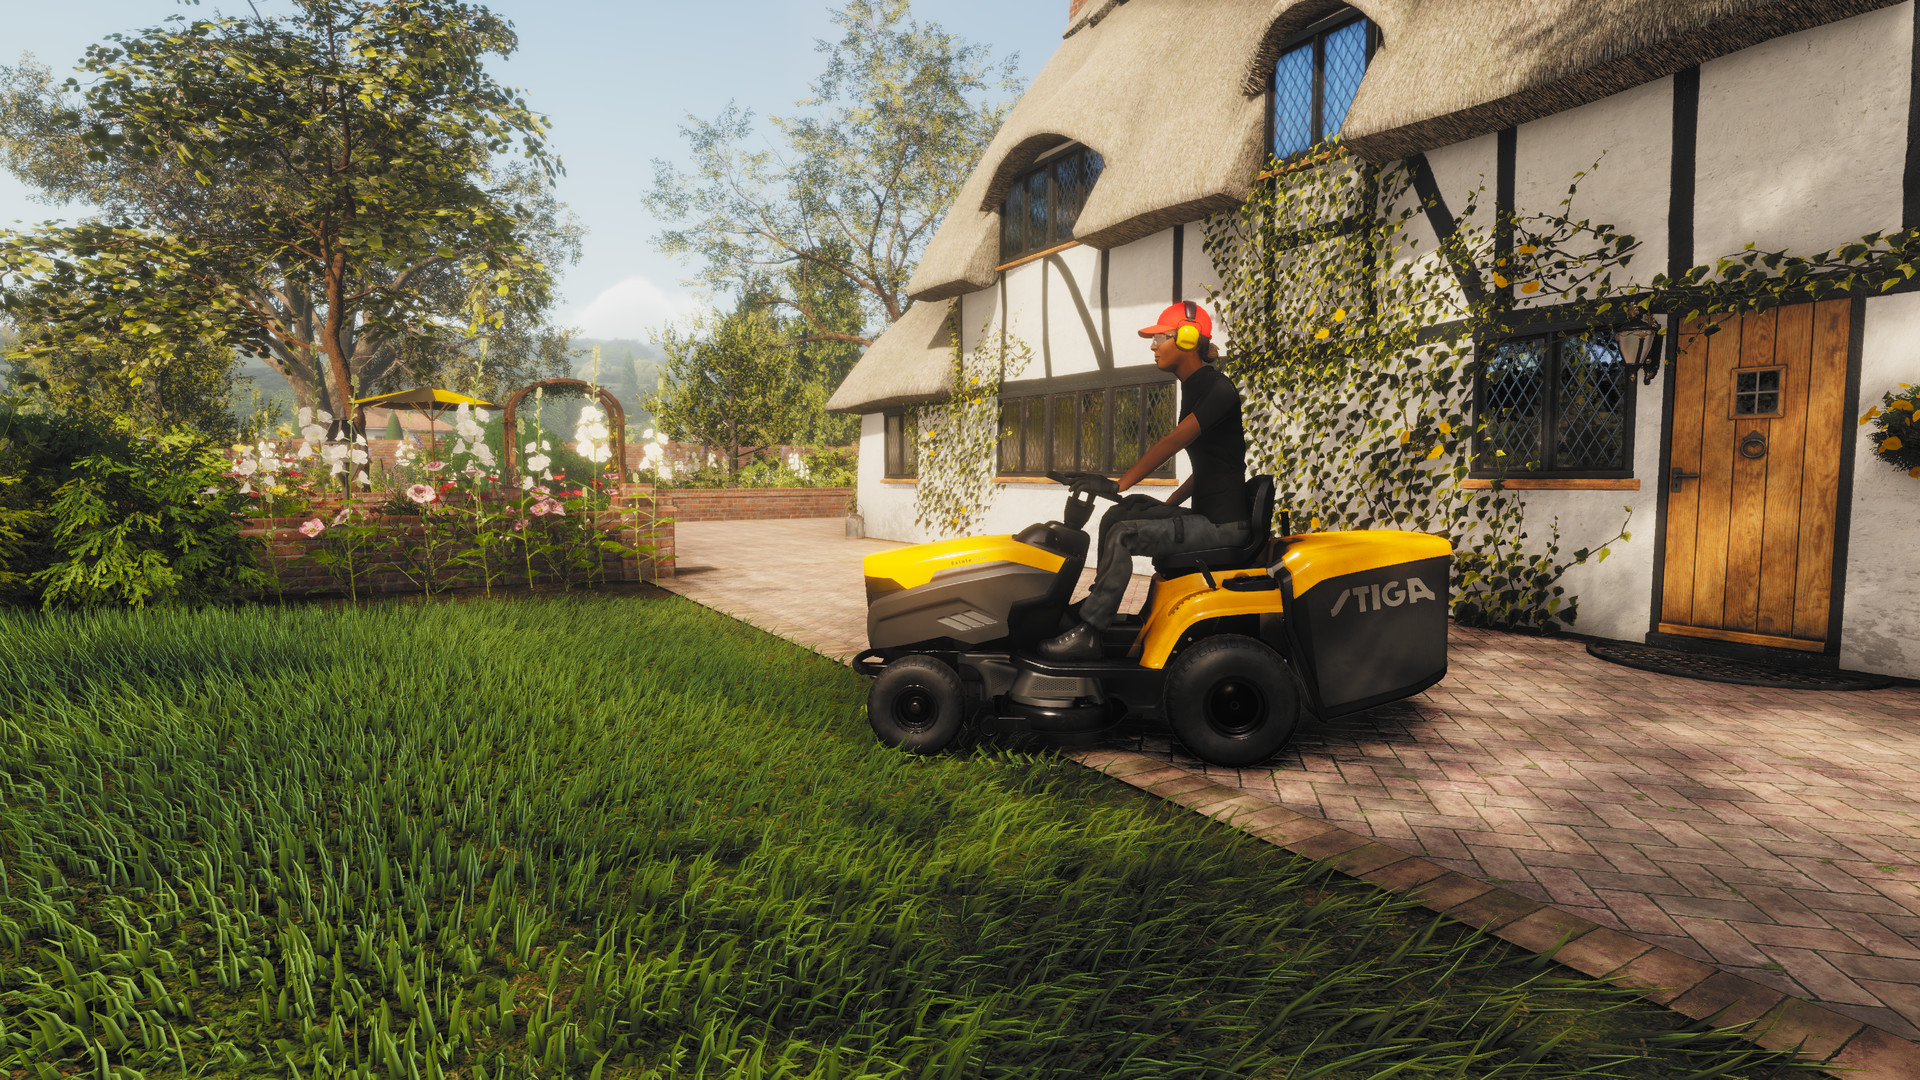 Lawn Mowing Simulator On Steam - logins roblox lawn mower simulator